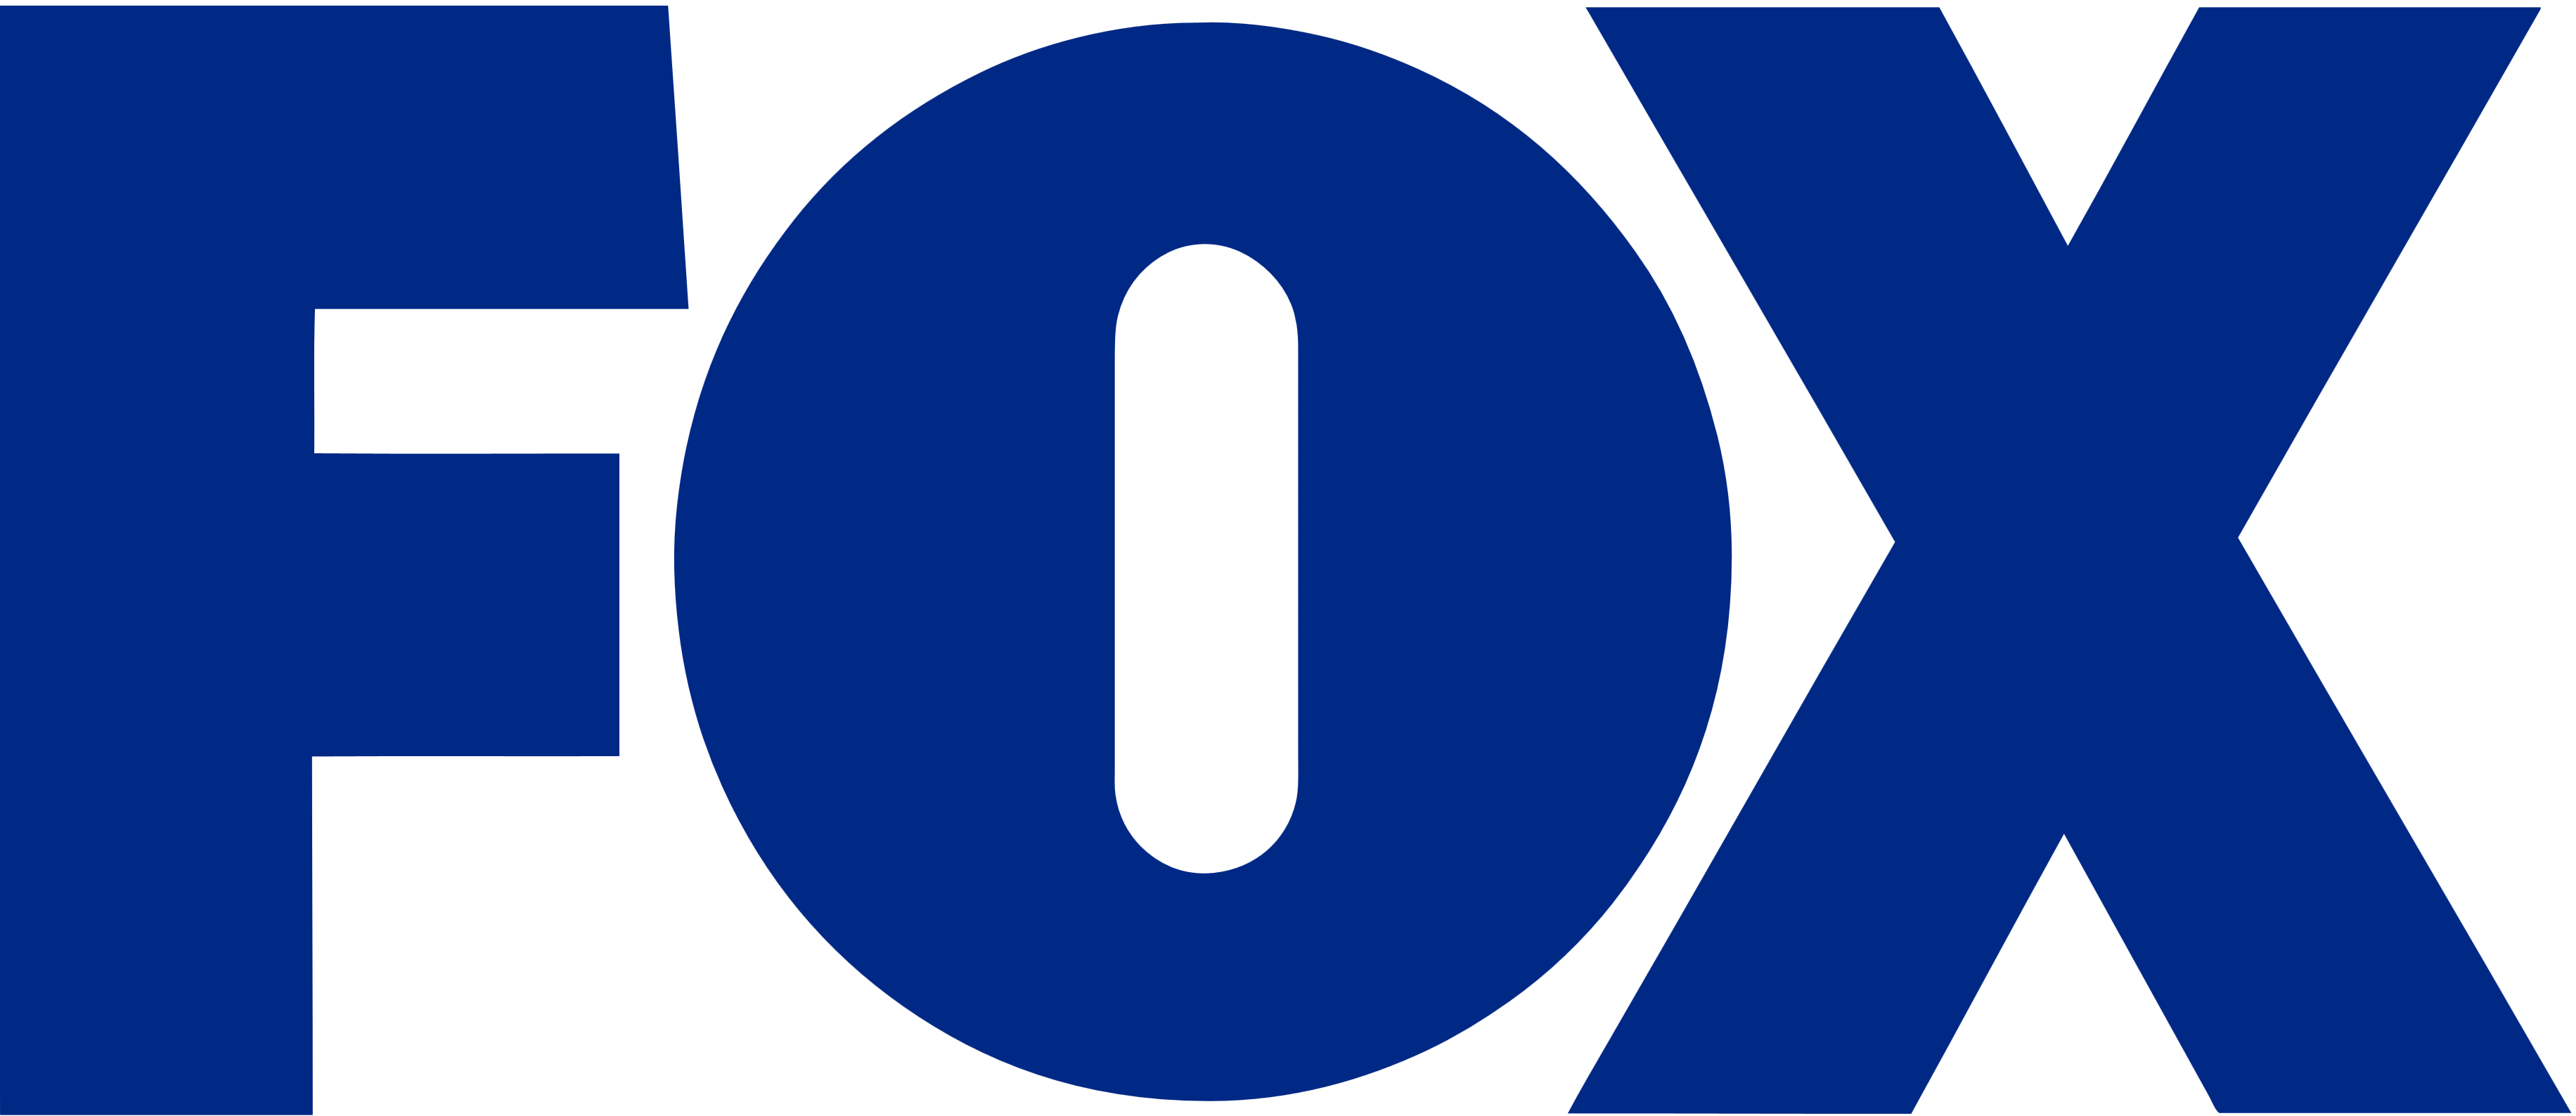 Fox Logos Download